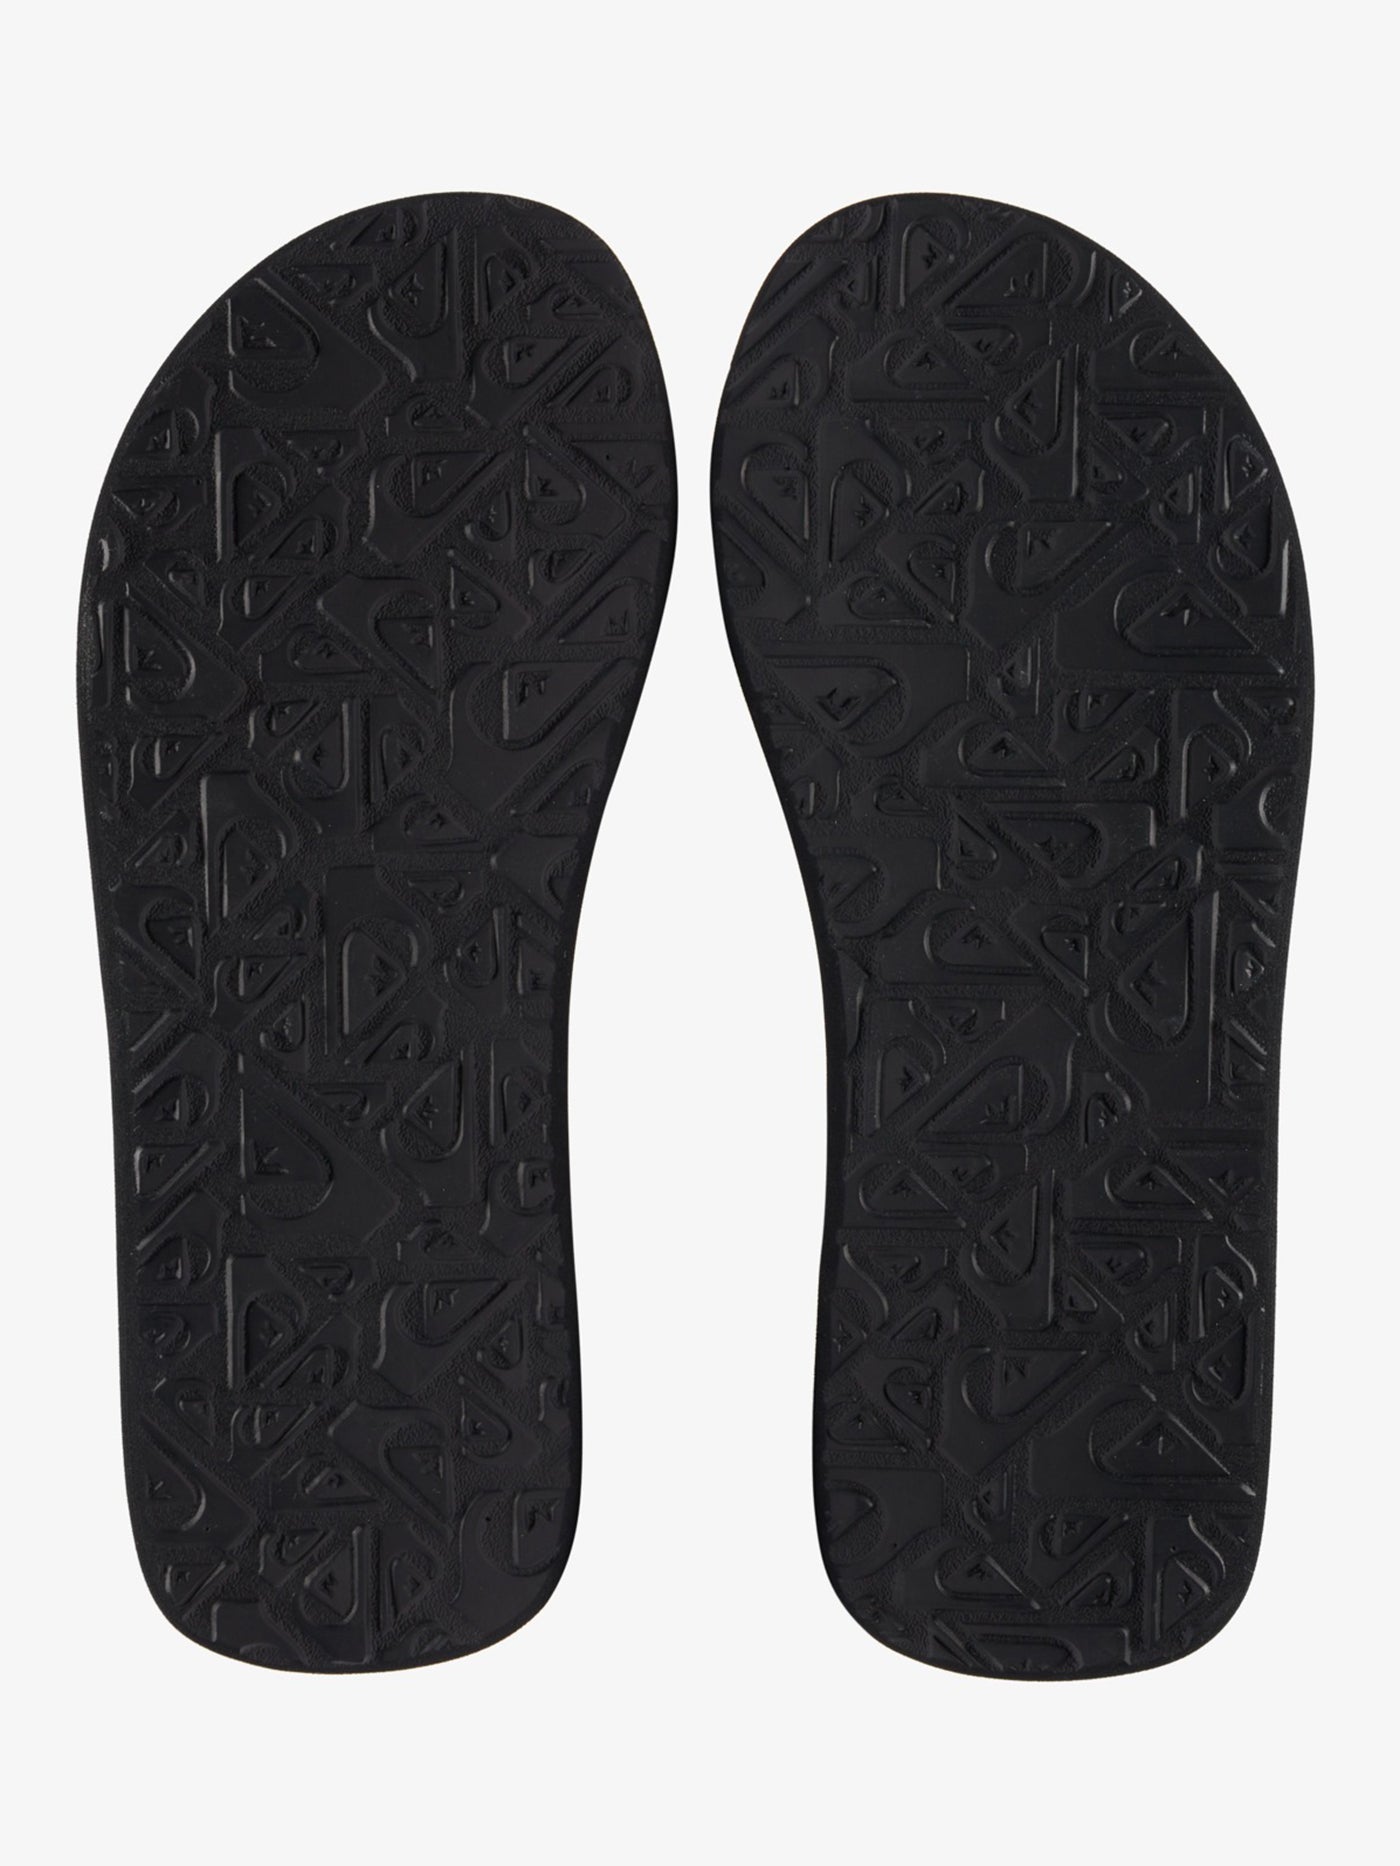 Quiksilver Molokai Layback Textured Black/White/Black Sandals